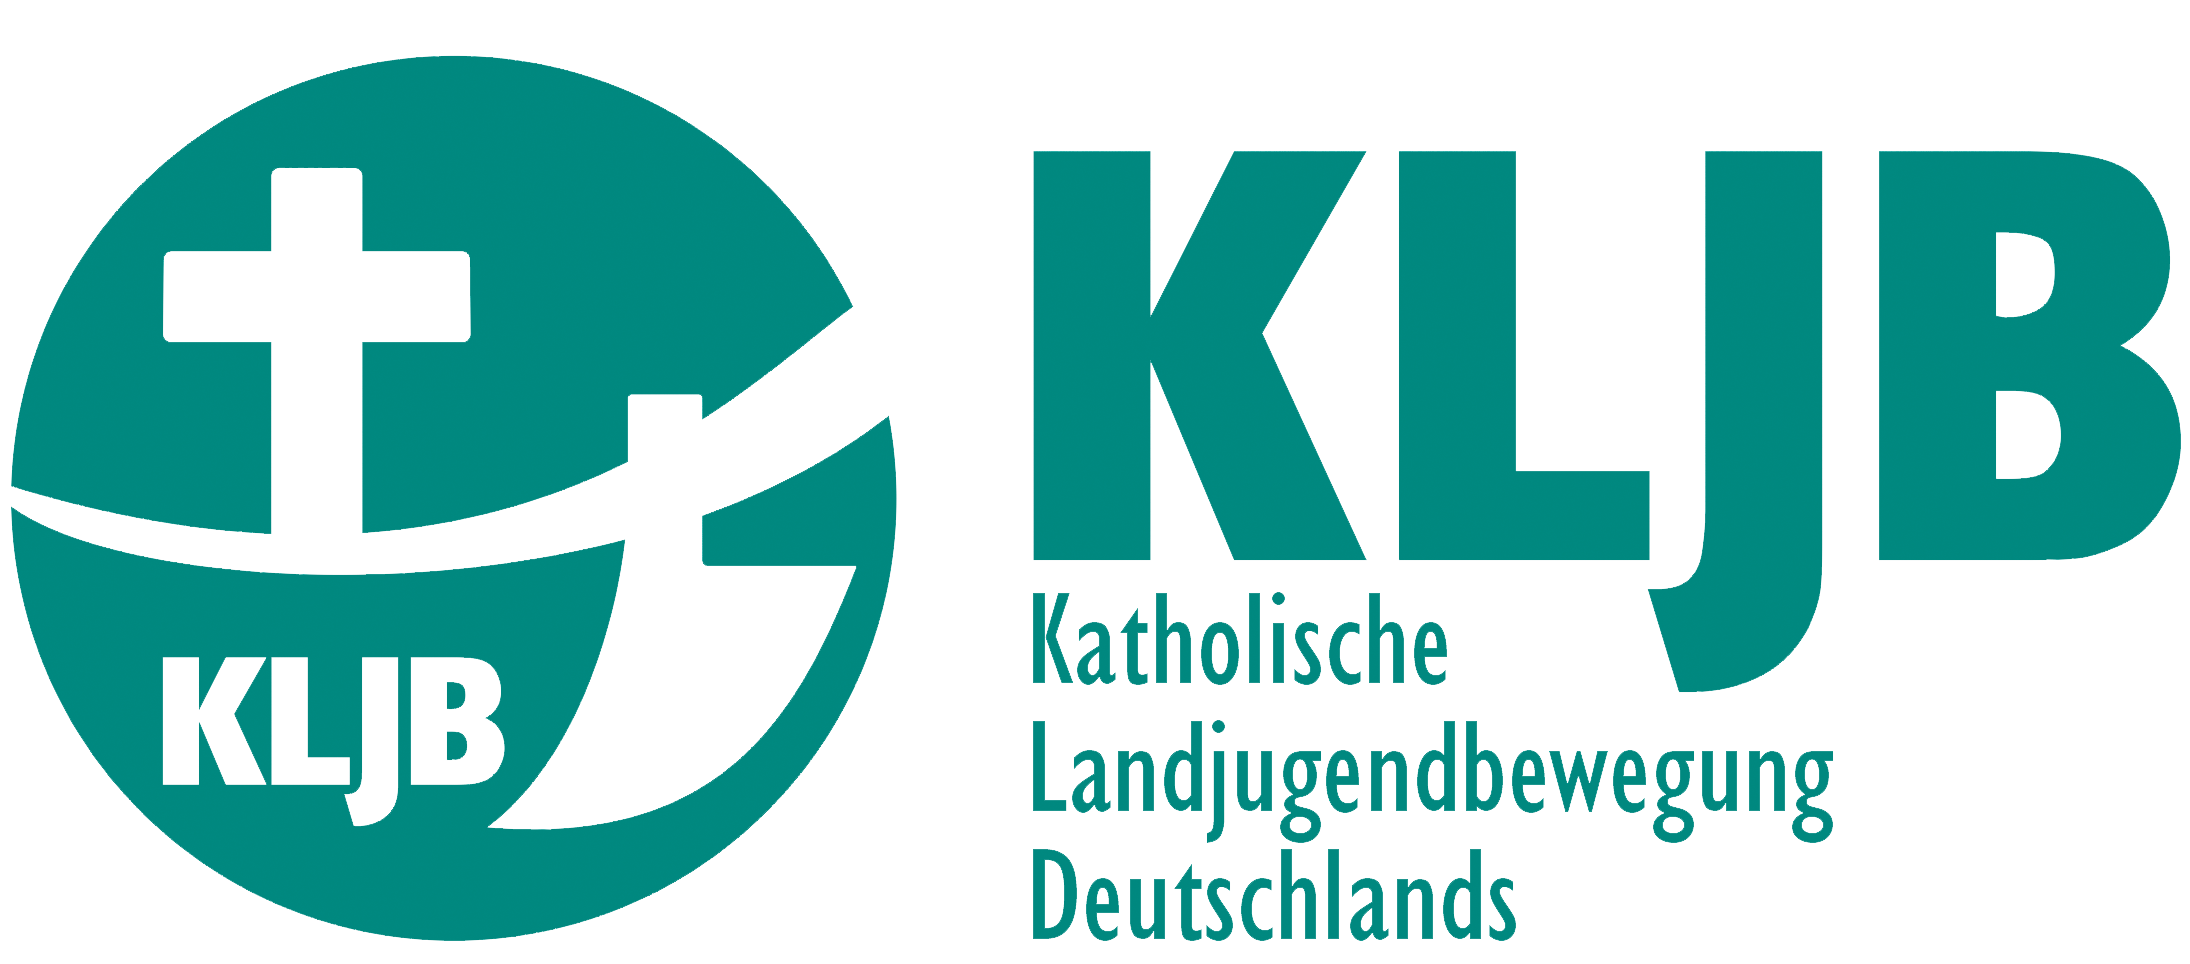 Katholische Landjugendbewegung Deutschlands e.V. logo